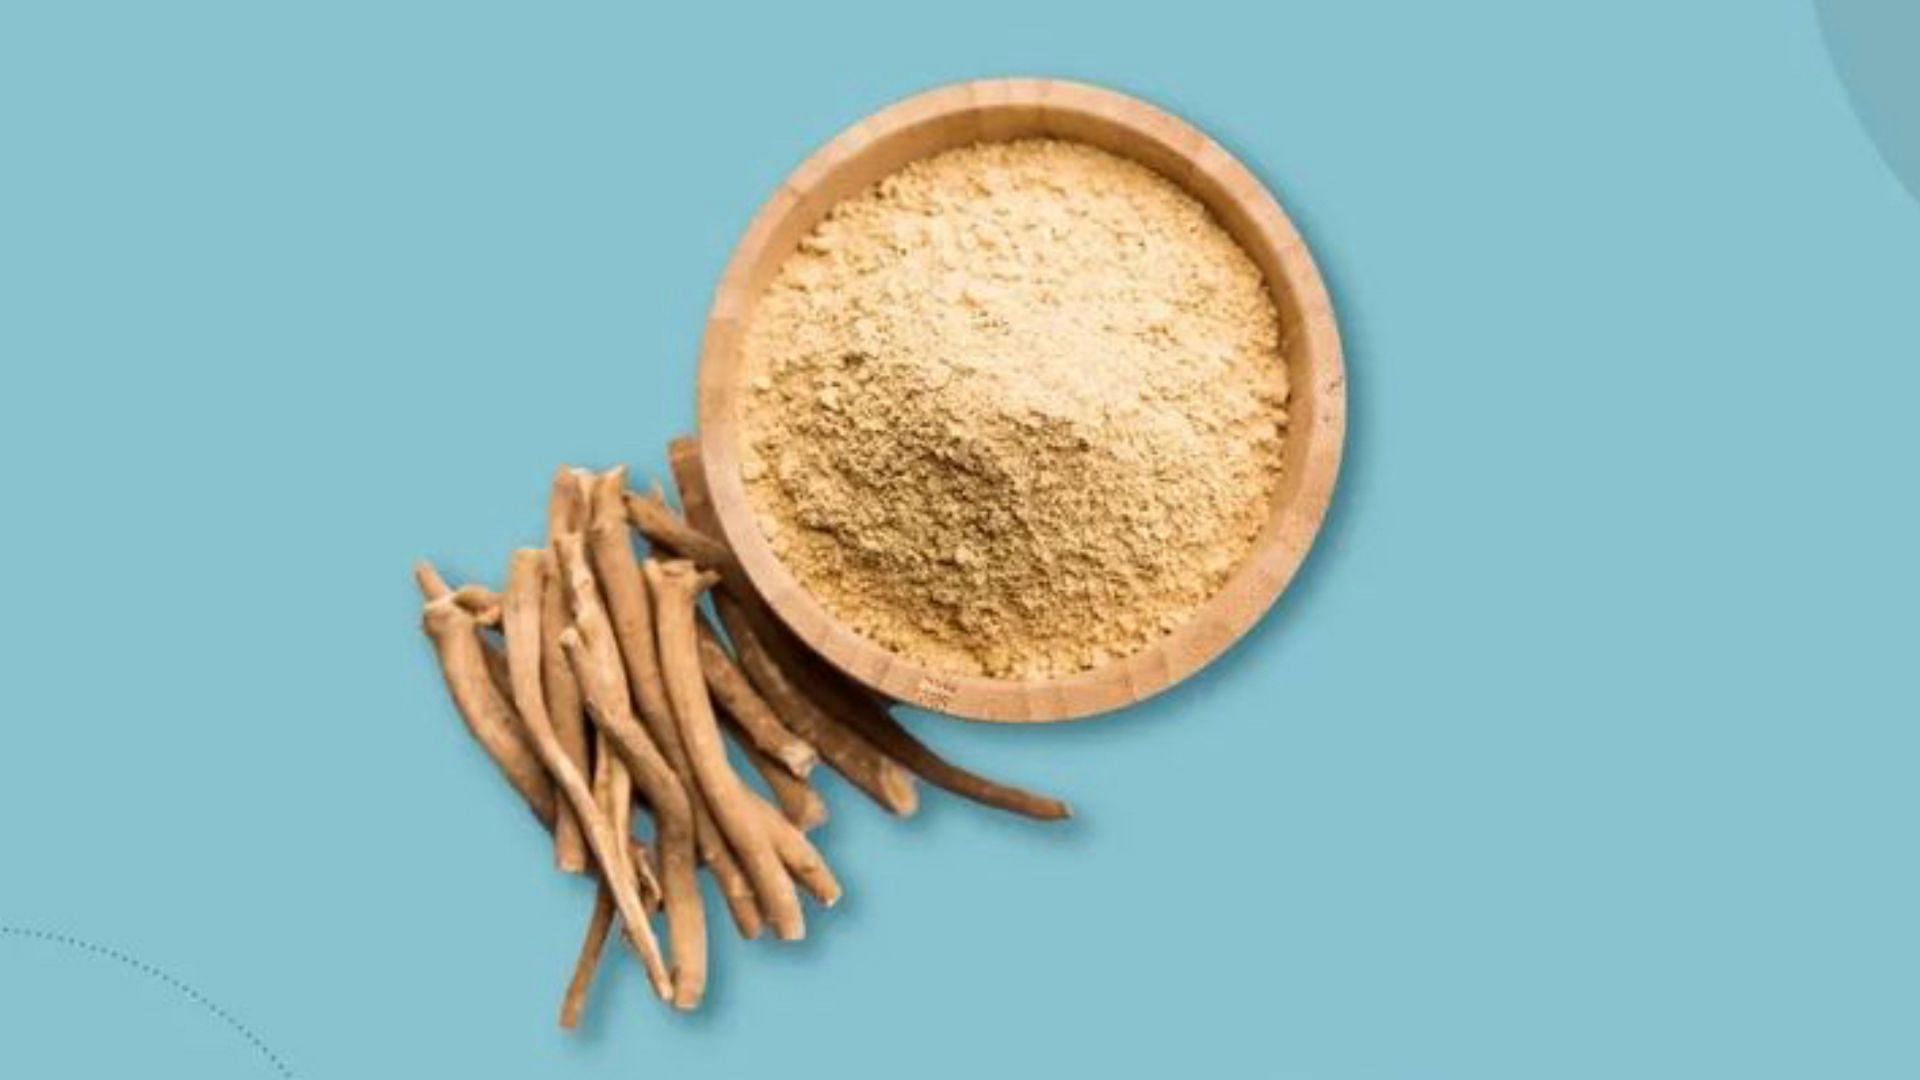 Ashwagandha is used in traditional medicines. (Photo via Instagram/healthcart)